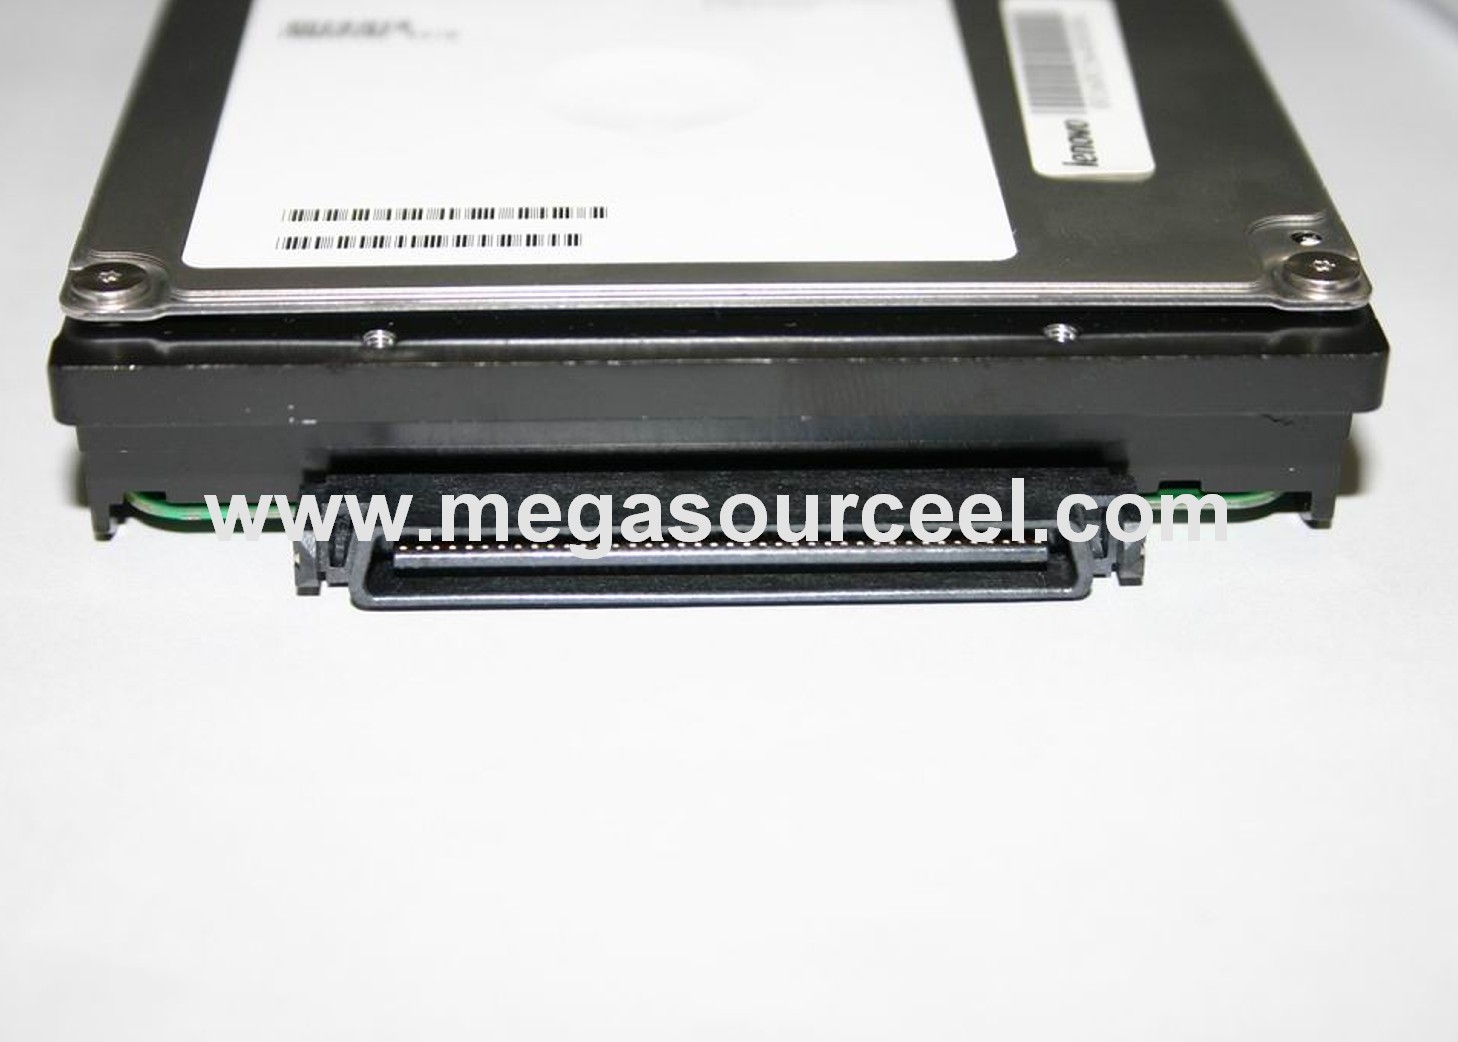 China Original Hitachi Server Hard Drive HUS103030FL3800 300 GB SCSI 80 Pin U320 10K RPM BD300884C2 factory